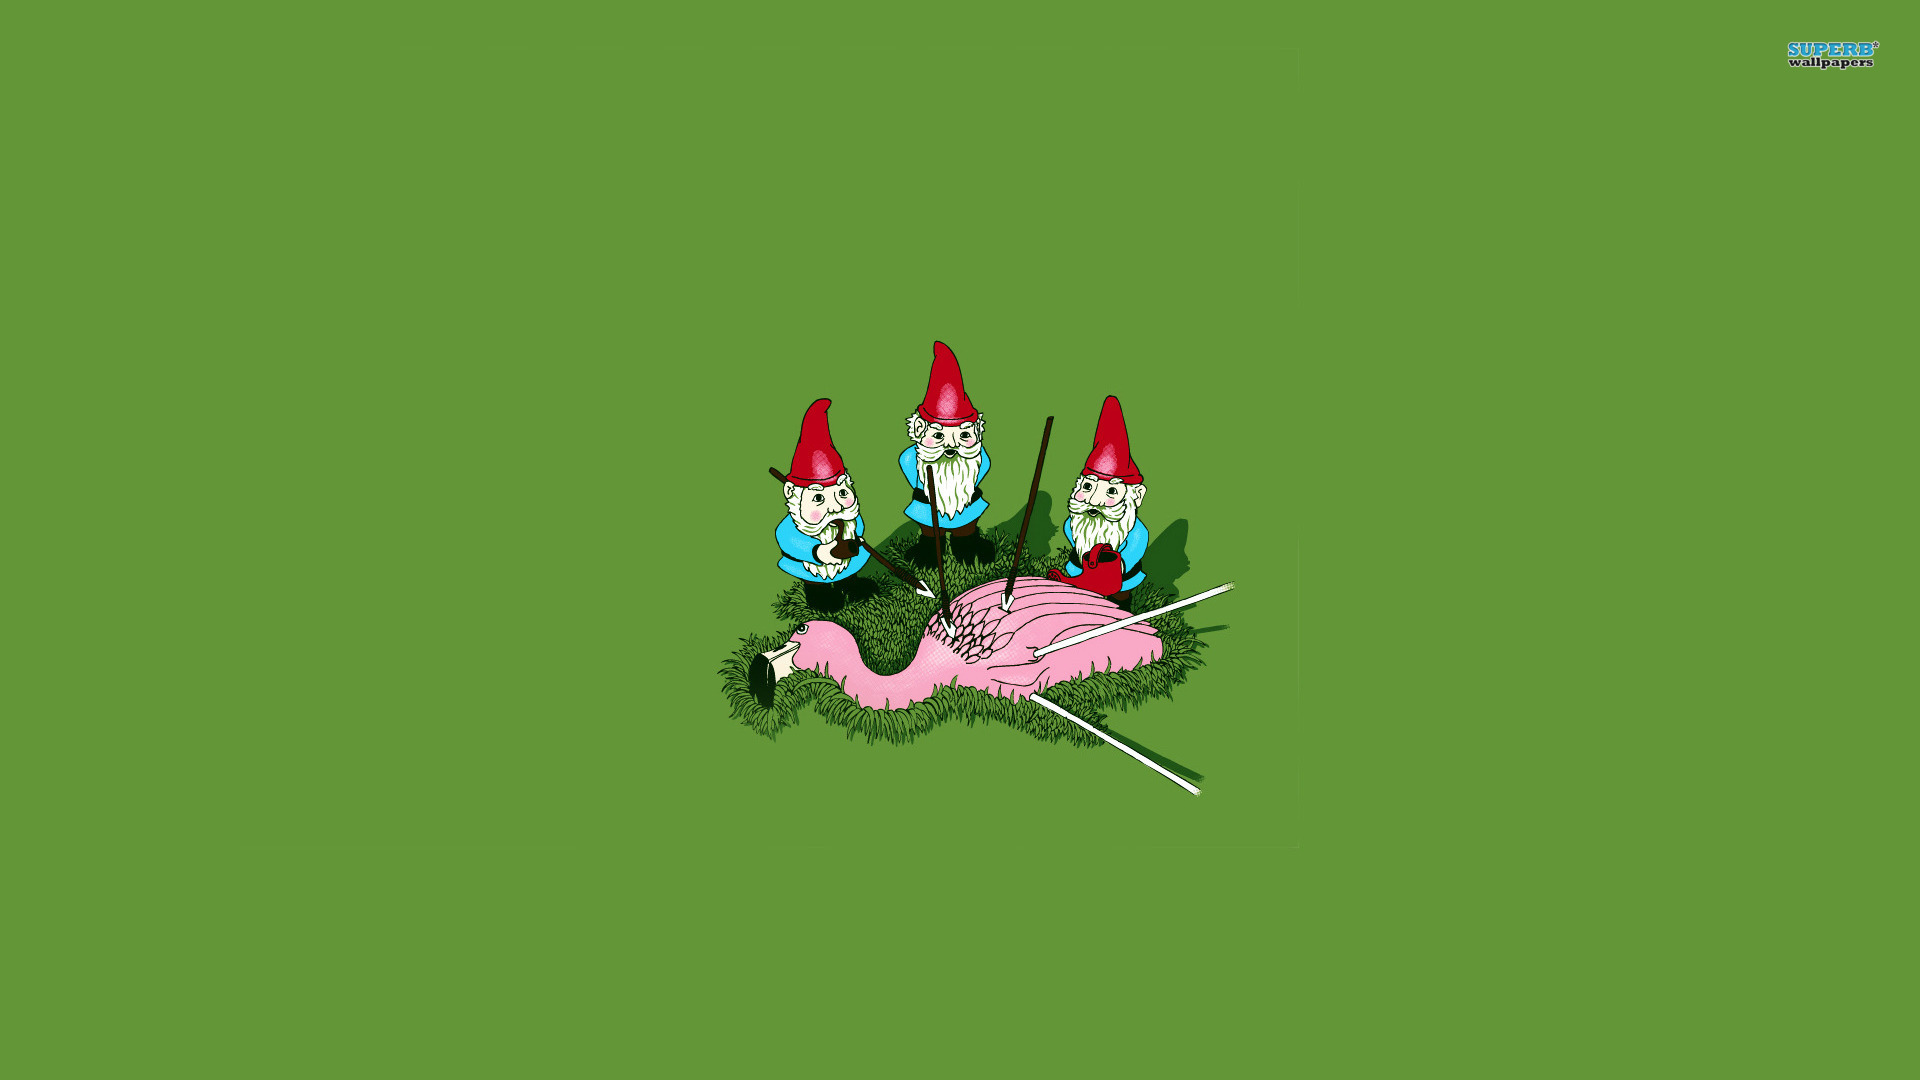 Garden Gnomes vs Flamingo wallpaper - Funny wallpapers - #14959